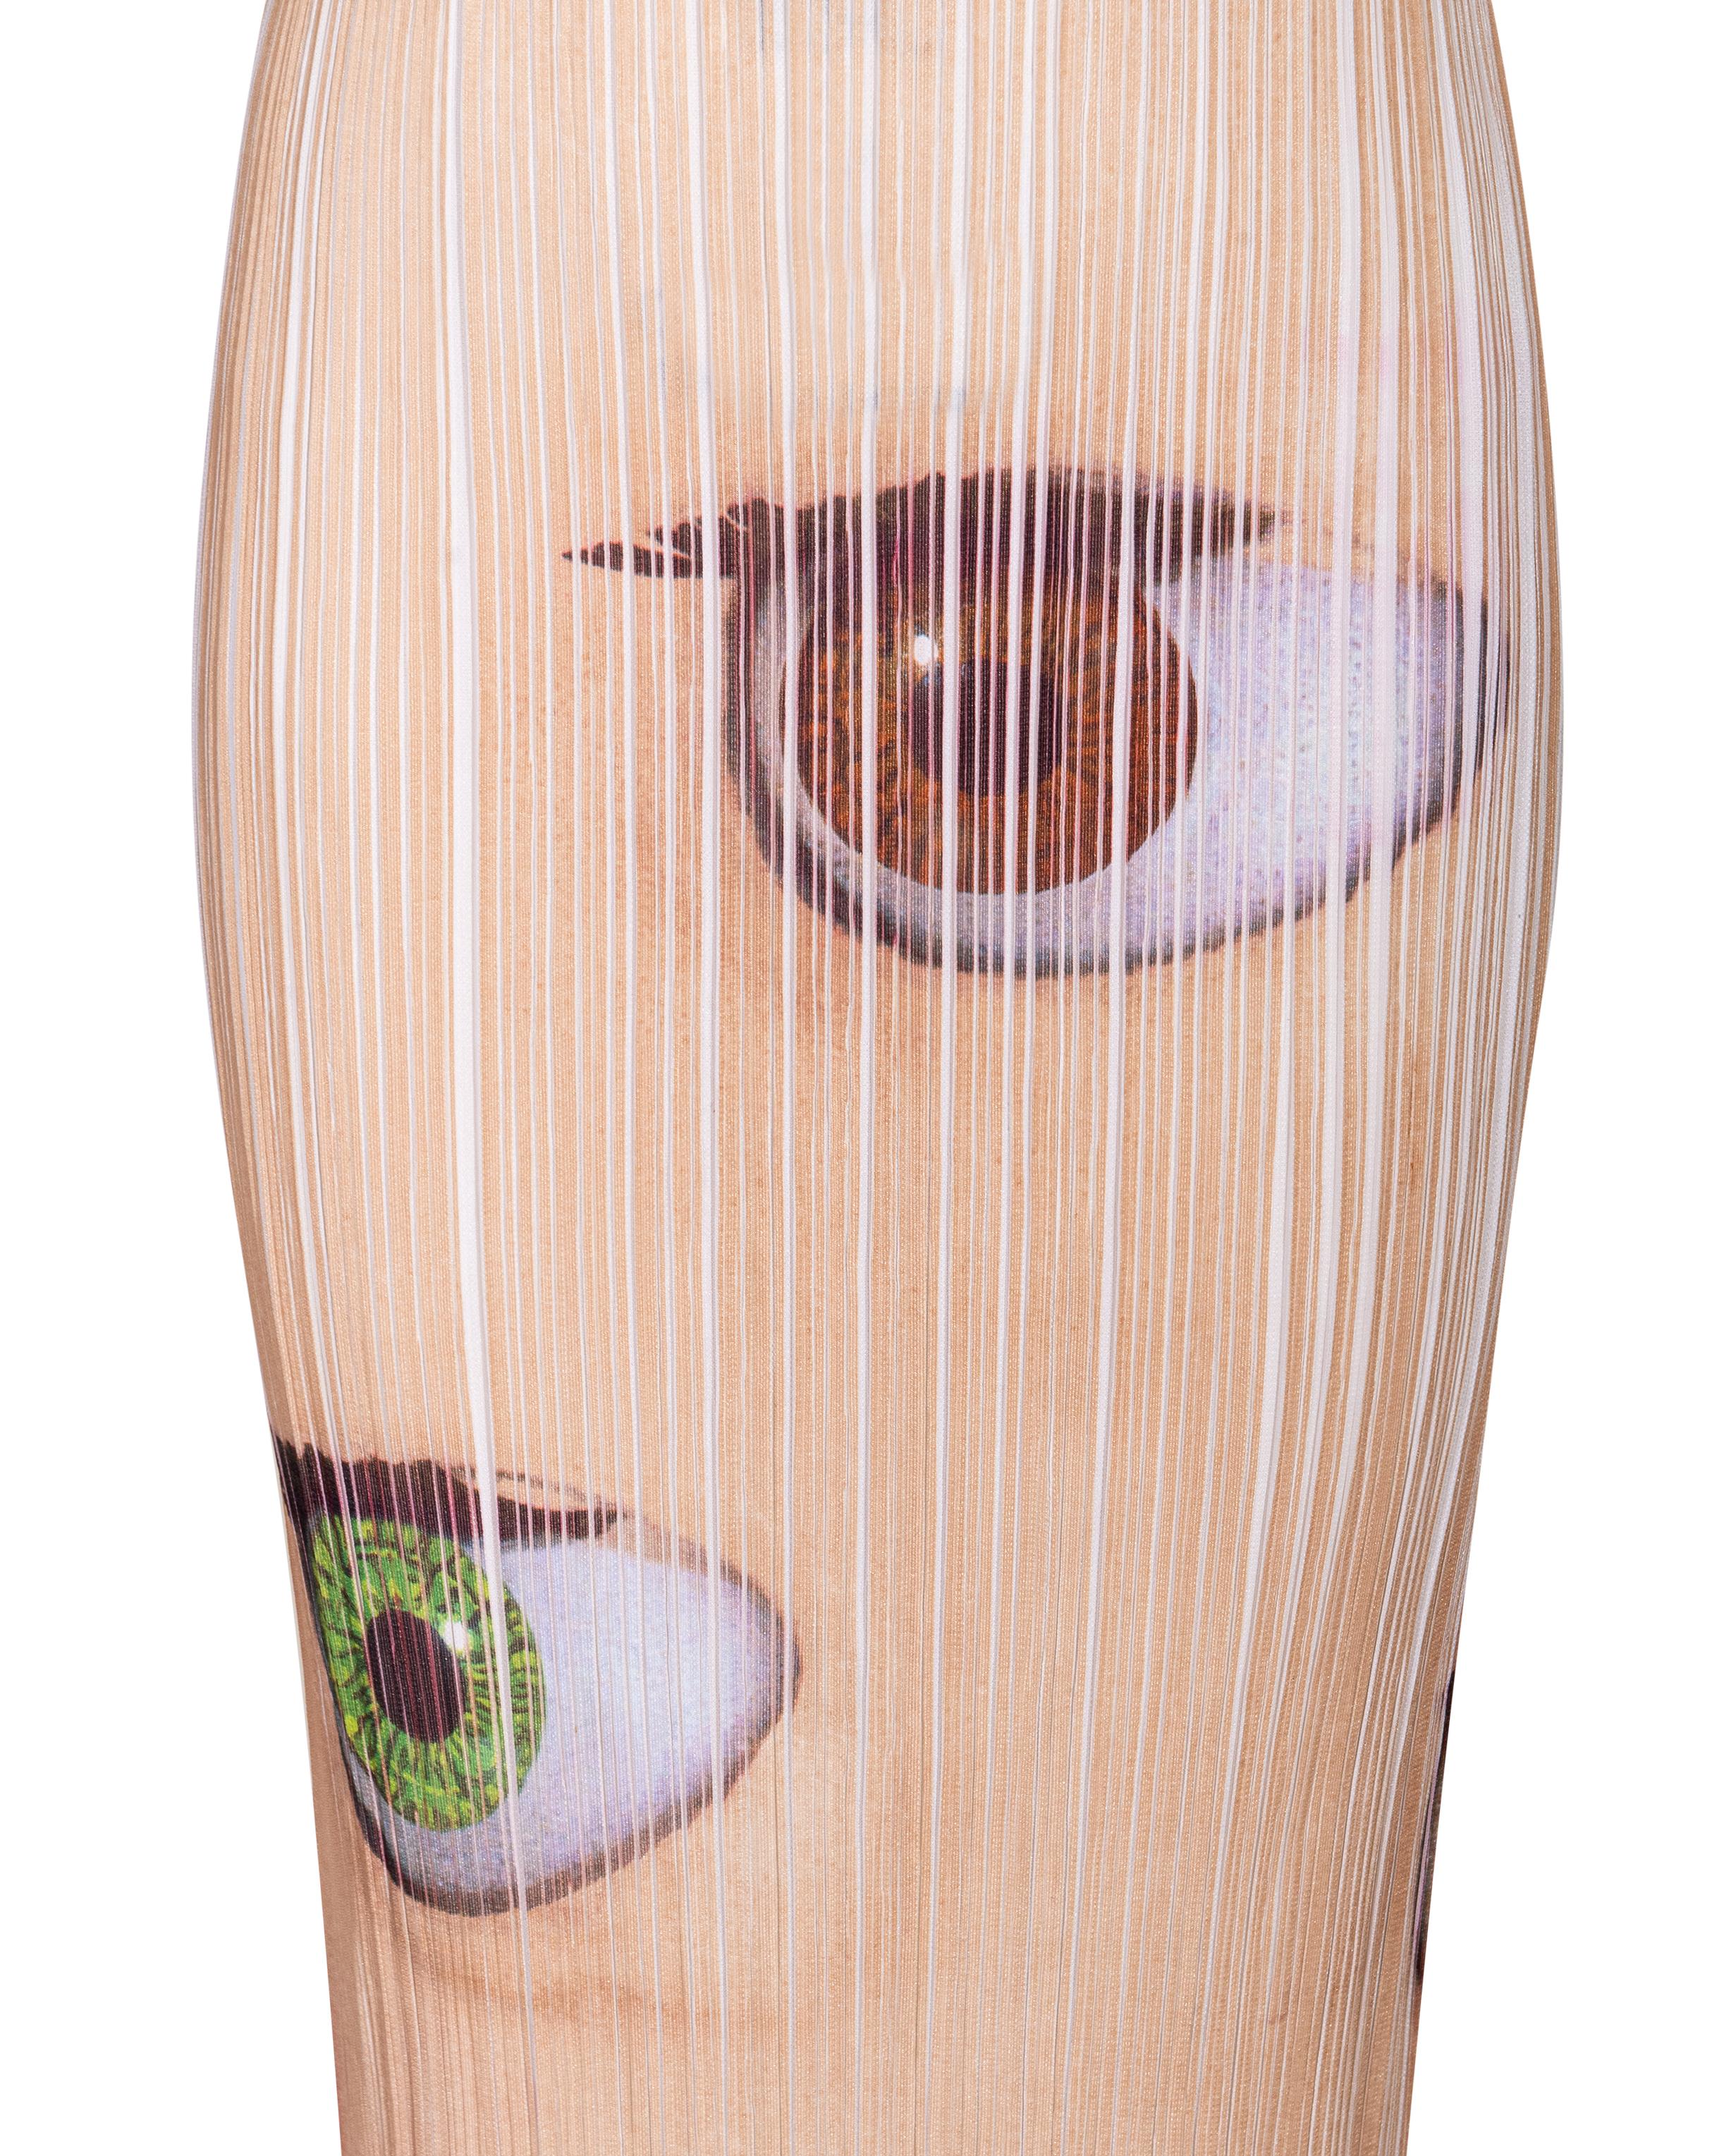 1998 Issey Miyake Artist Series No. 3 Tim Hawkinson Pleated Eyeball Motif Dress For Sale 4